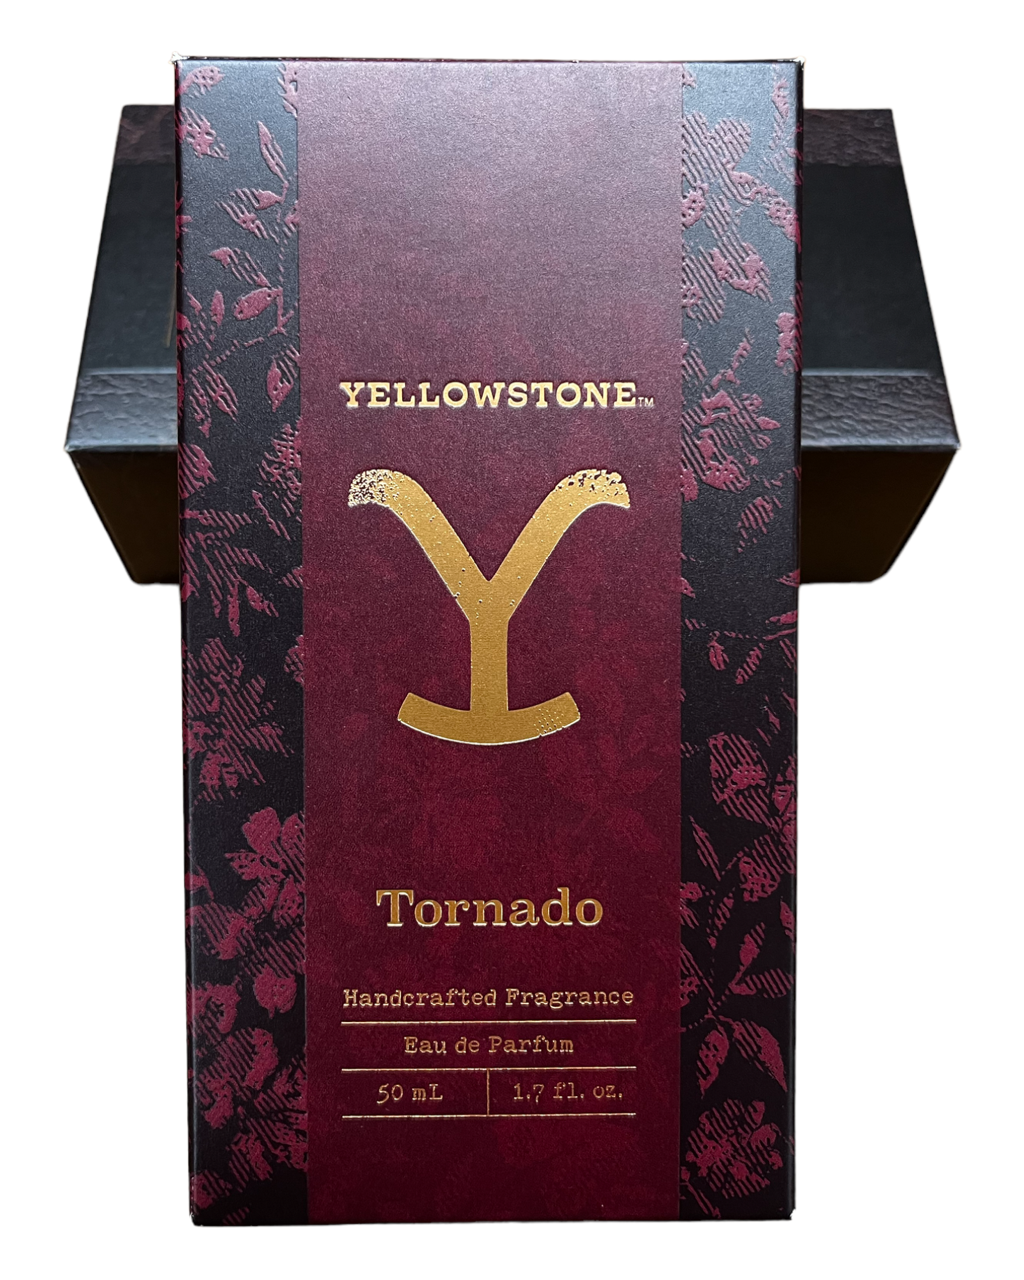 Yellowstone Tornado Ladies Parfum